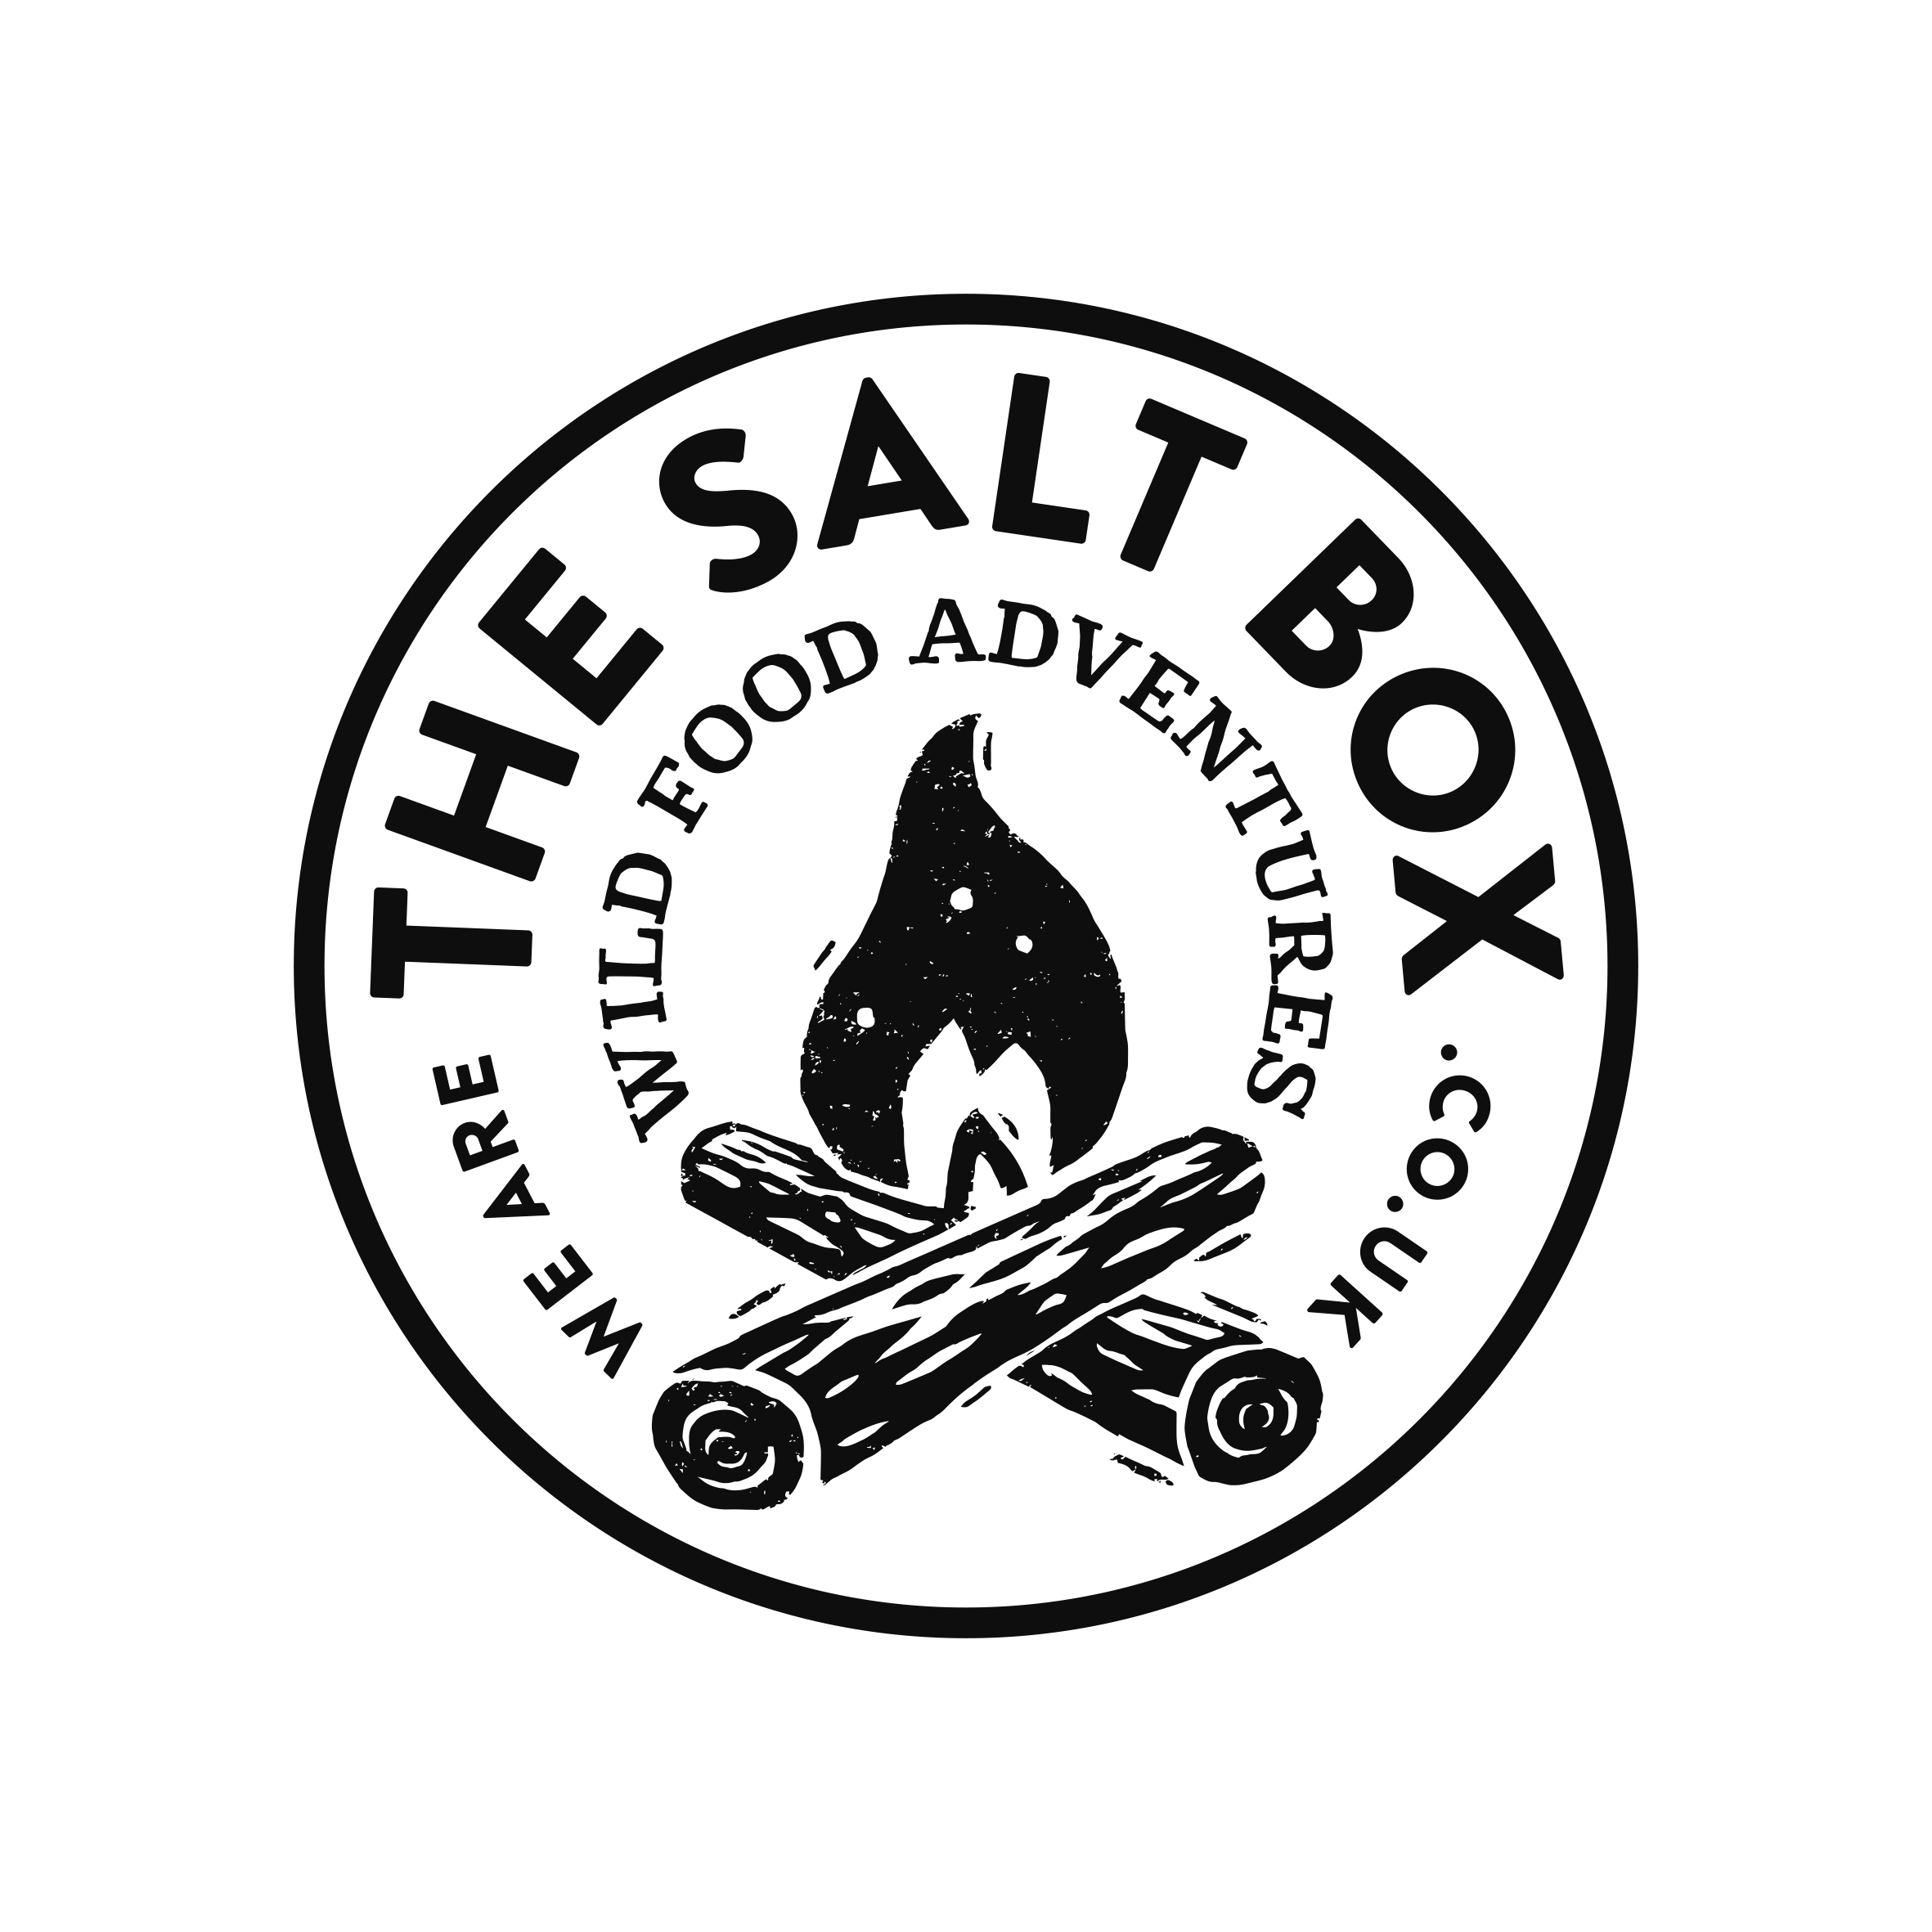 The Salt Box in 